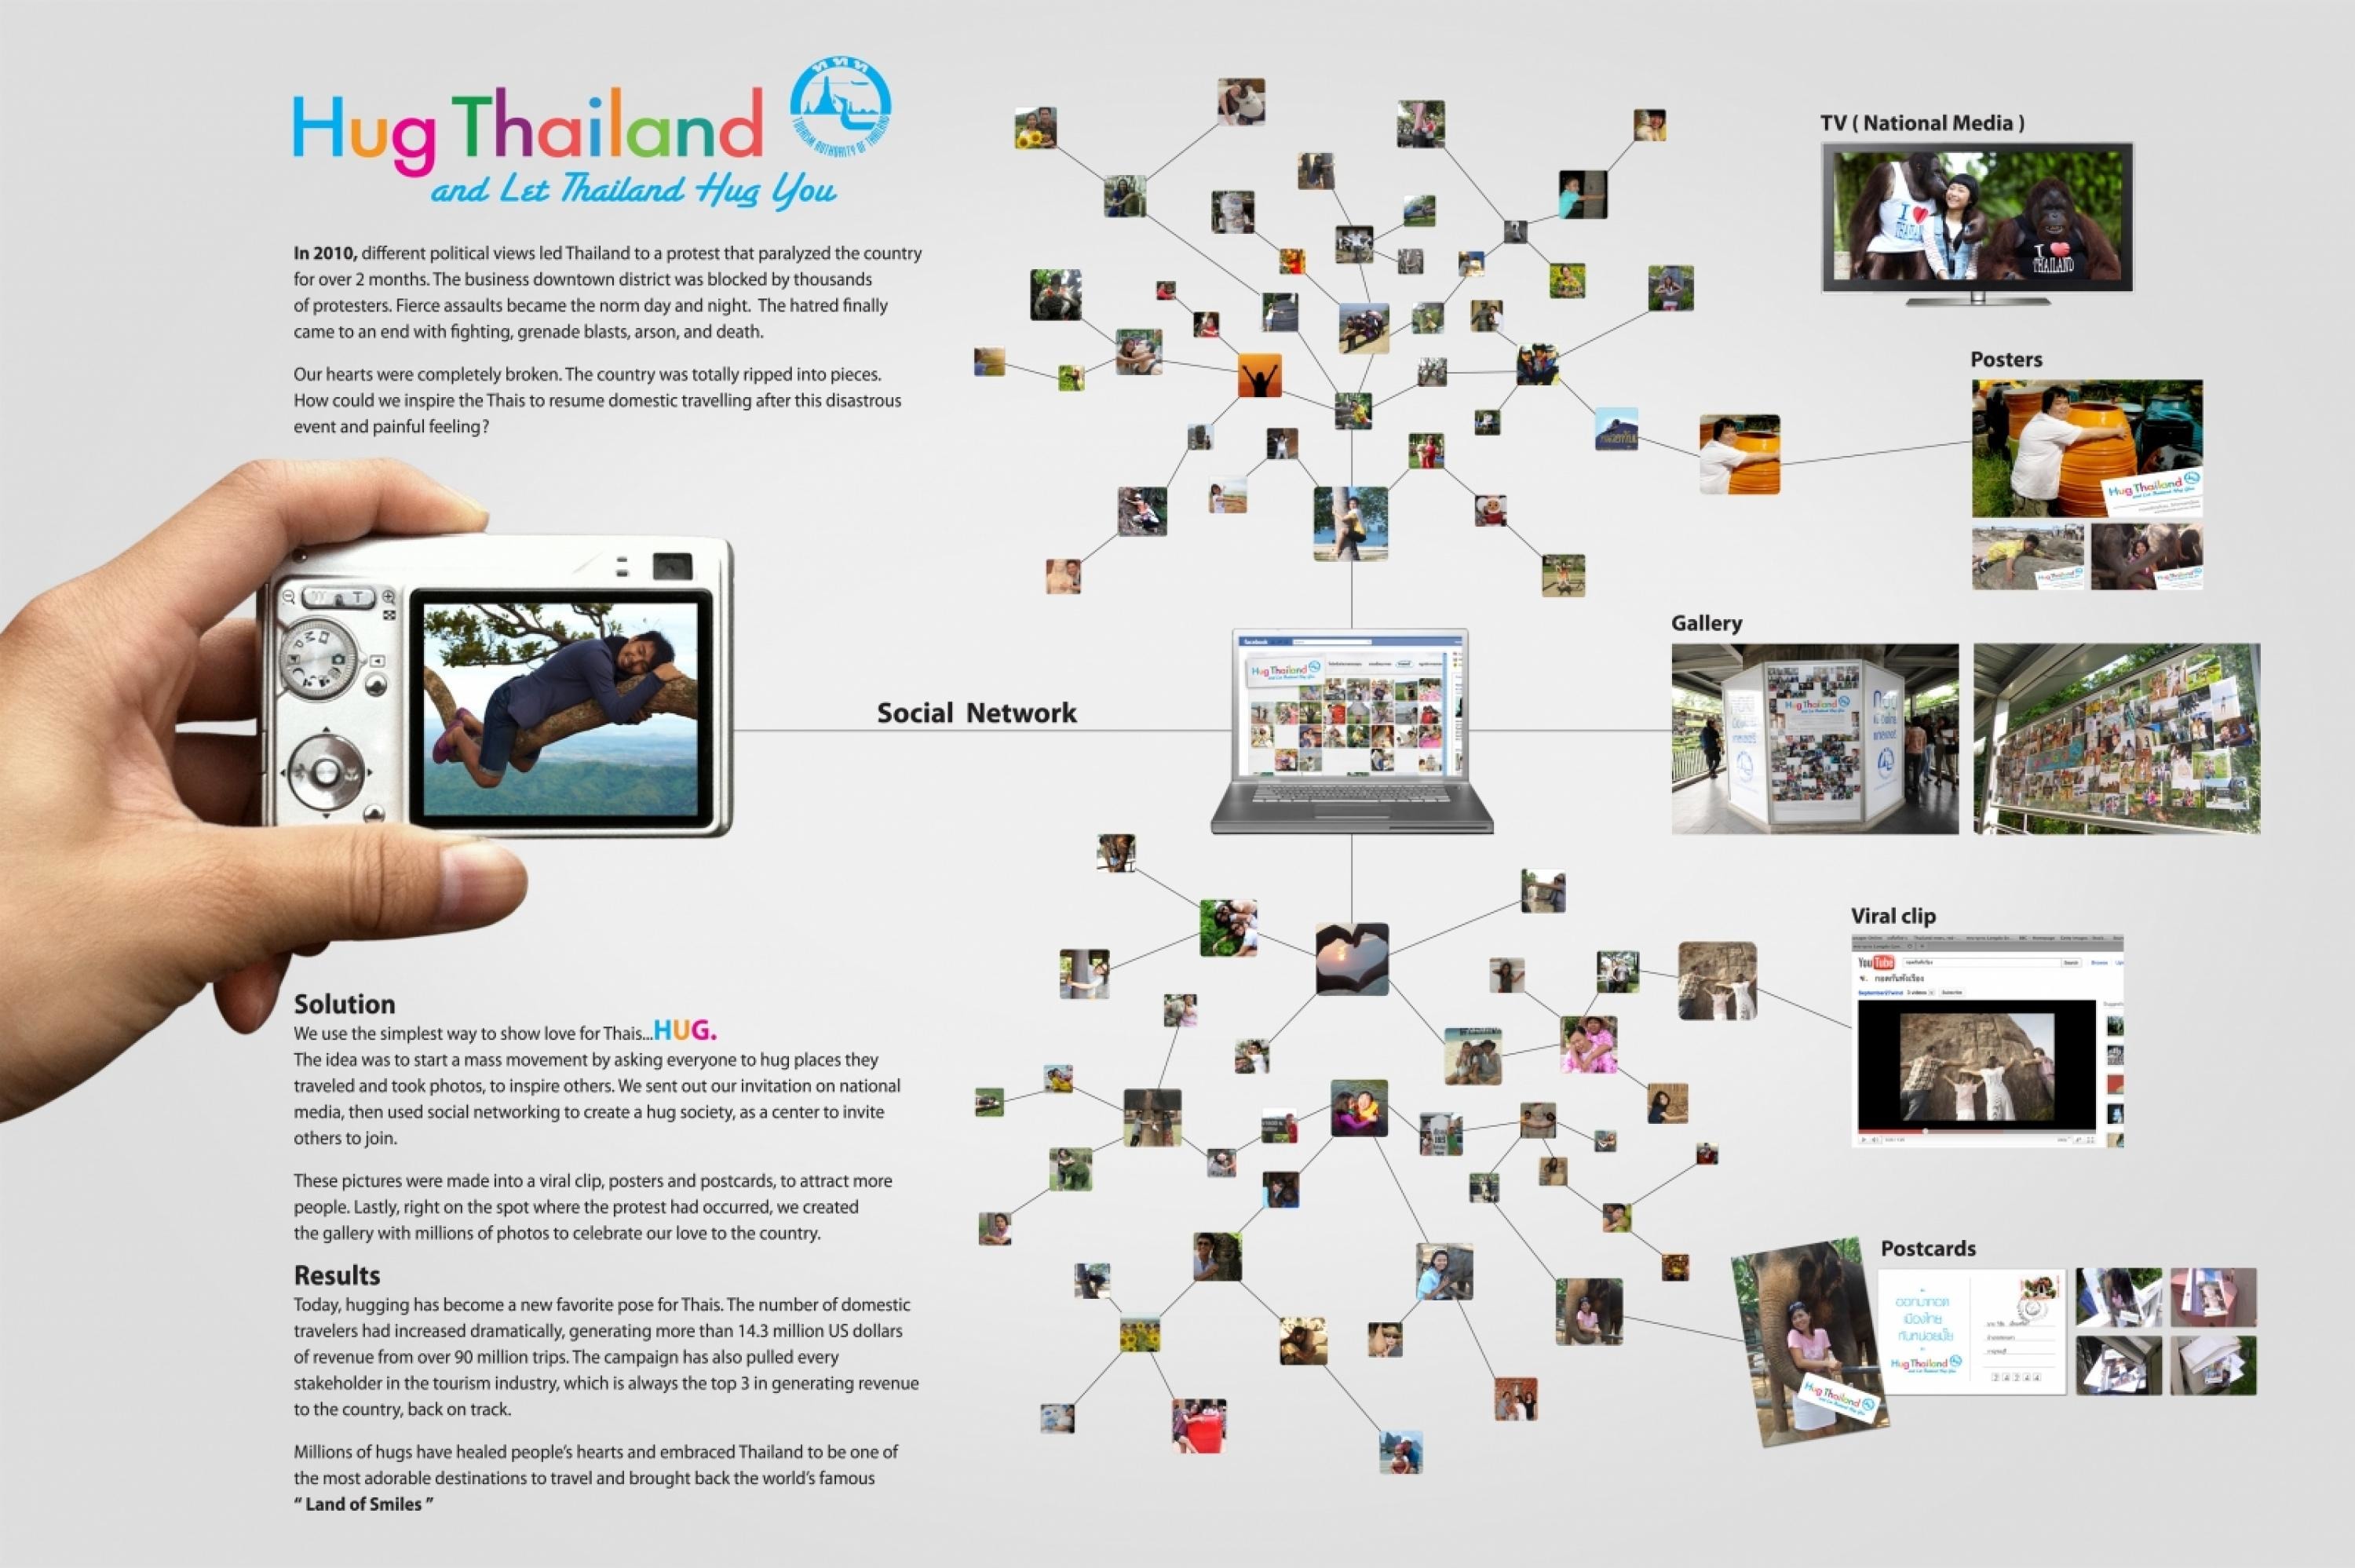 TOURISM AUTHORITY OF THAILAND